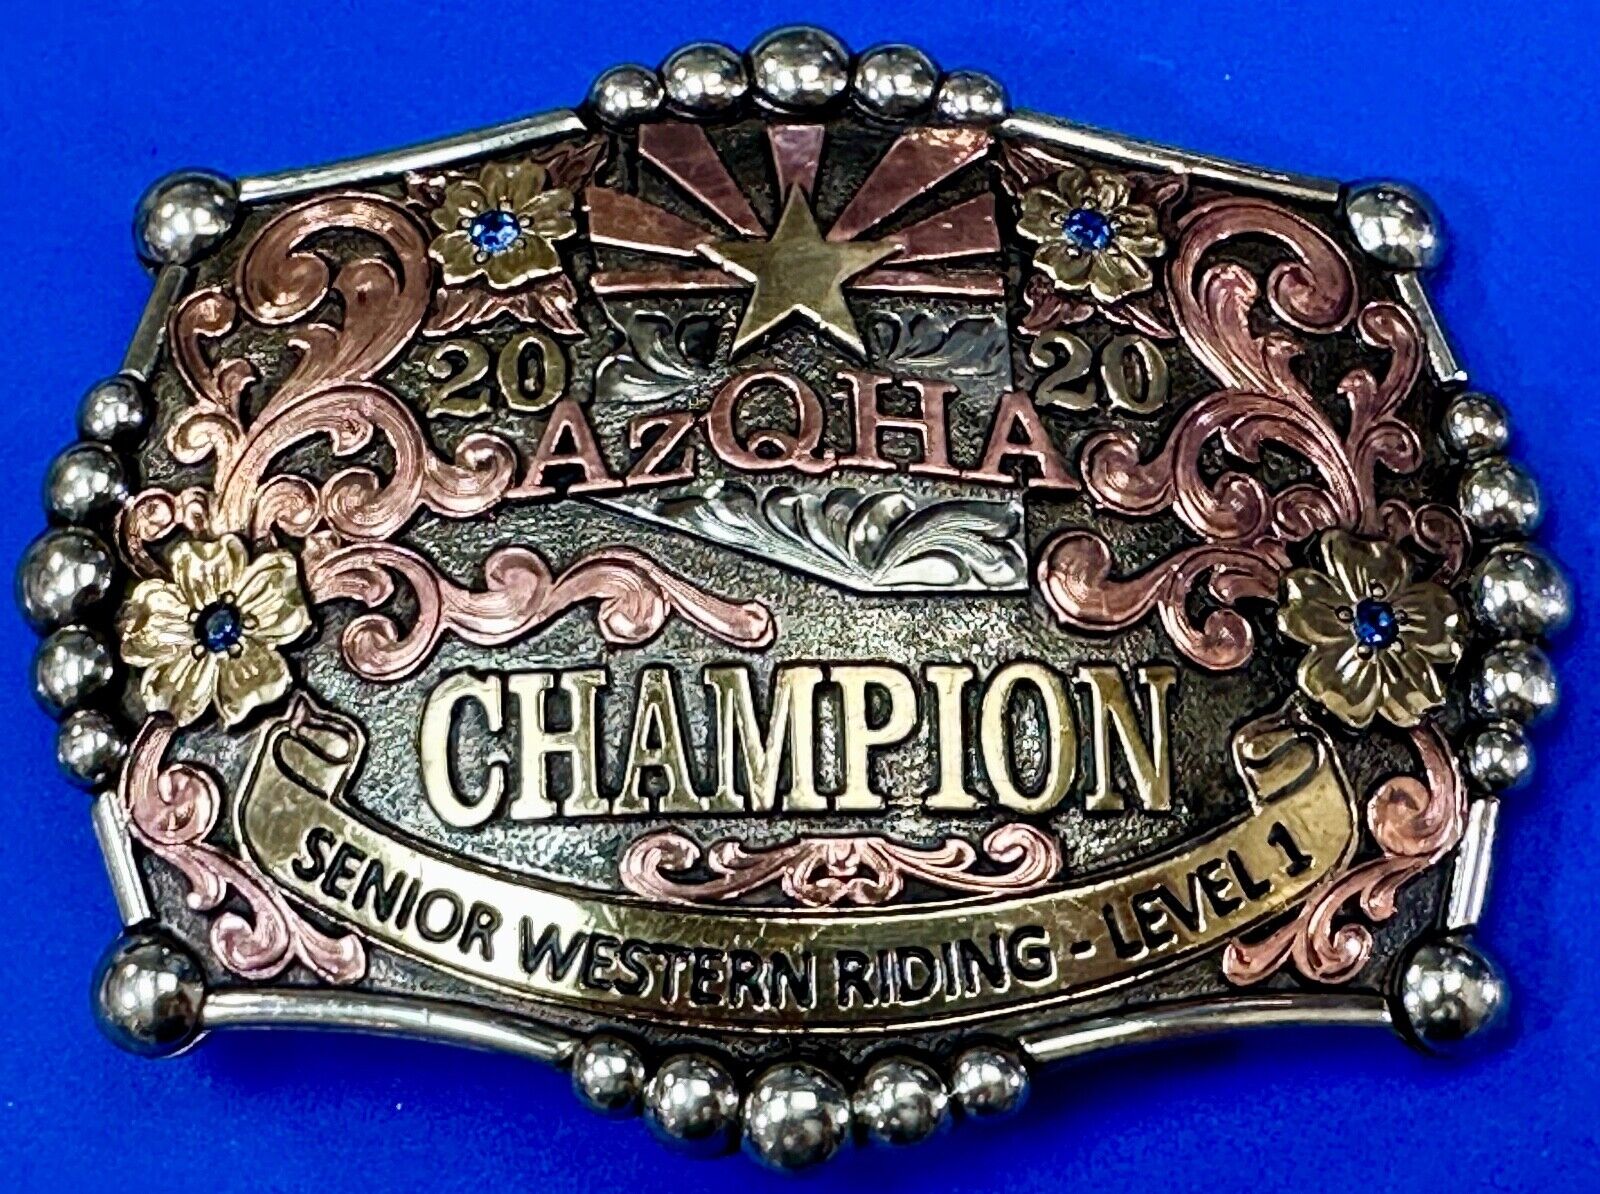 2020 Champion AZQHA Senior Western Riding Preston Williams Trophy belt buckle